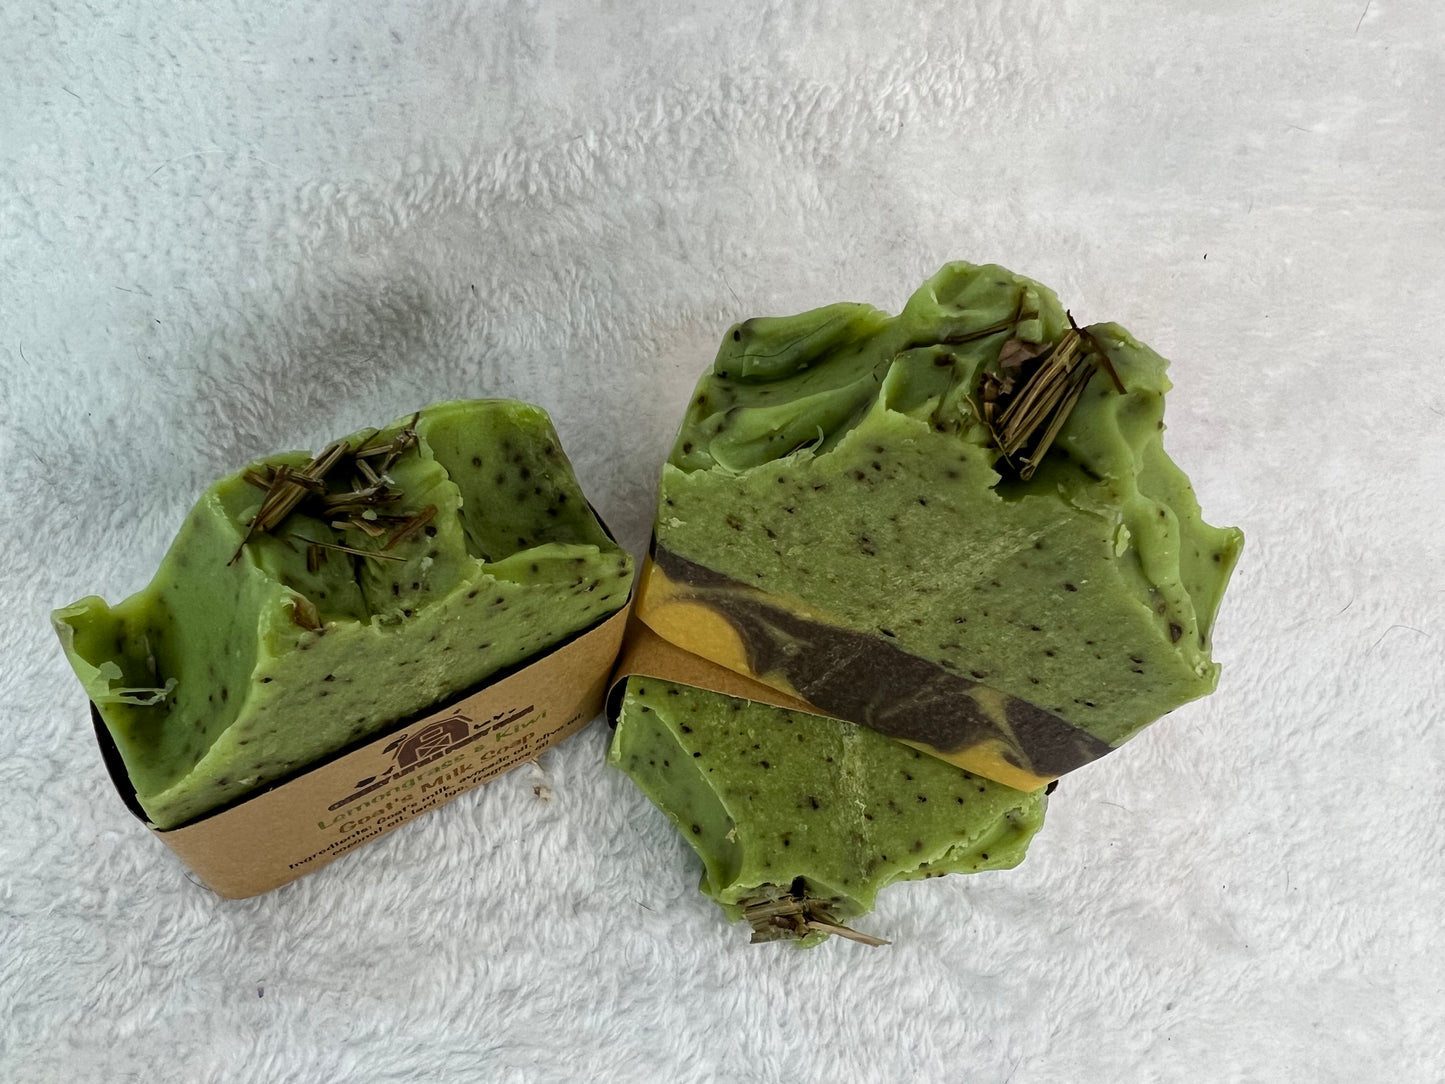 Lemongrass and Kiwi - Handcrafted Goat Milk Soap